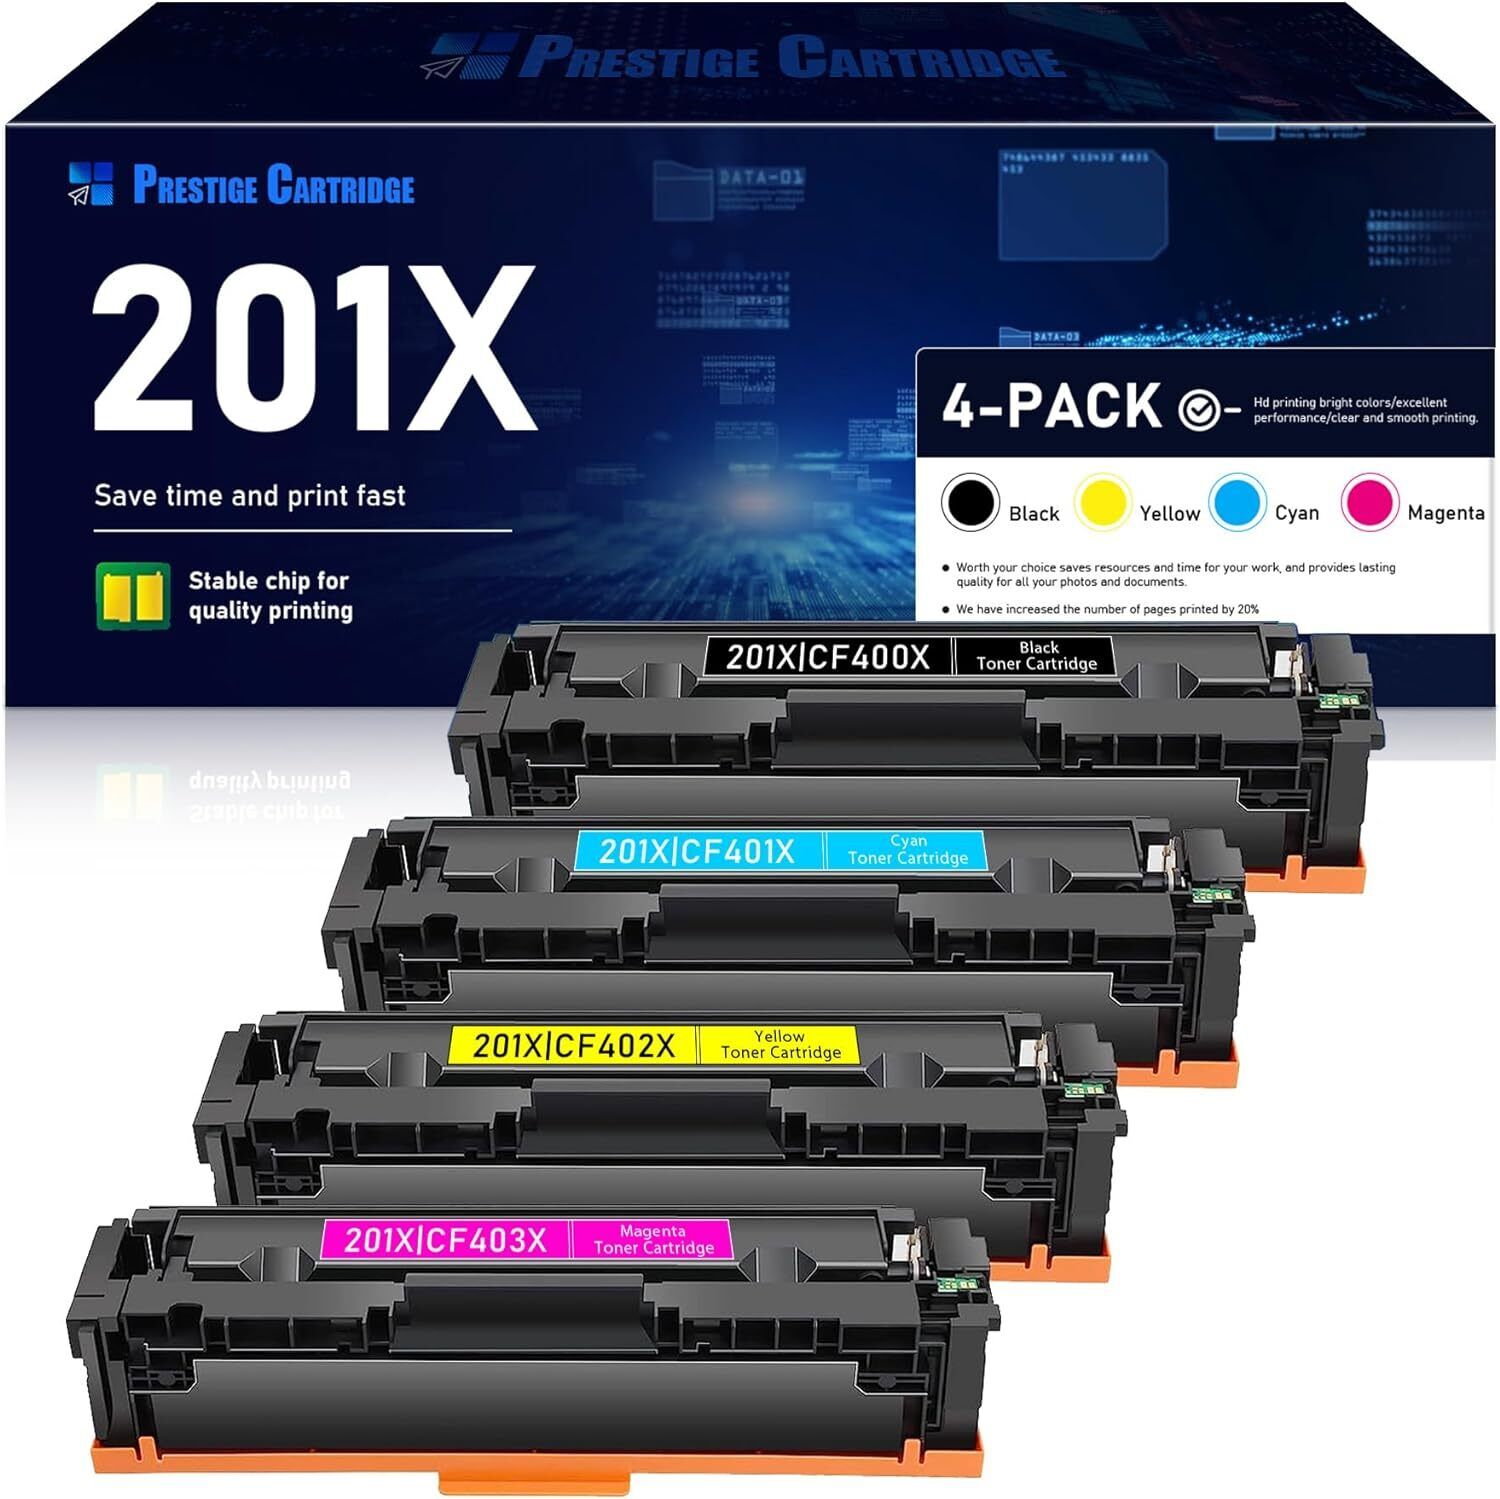 201X|CF400X Toner Cartridges Replacement for HP M277dw|Black Cyan Magenta Yellow